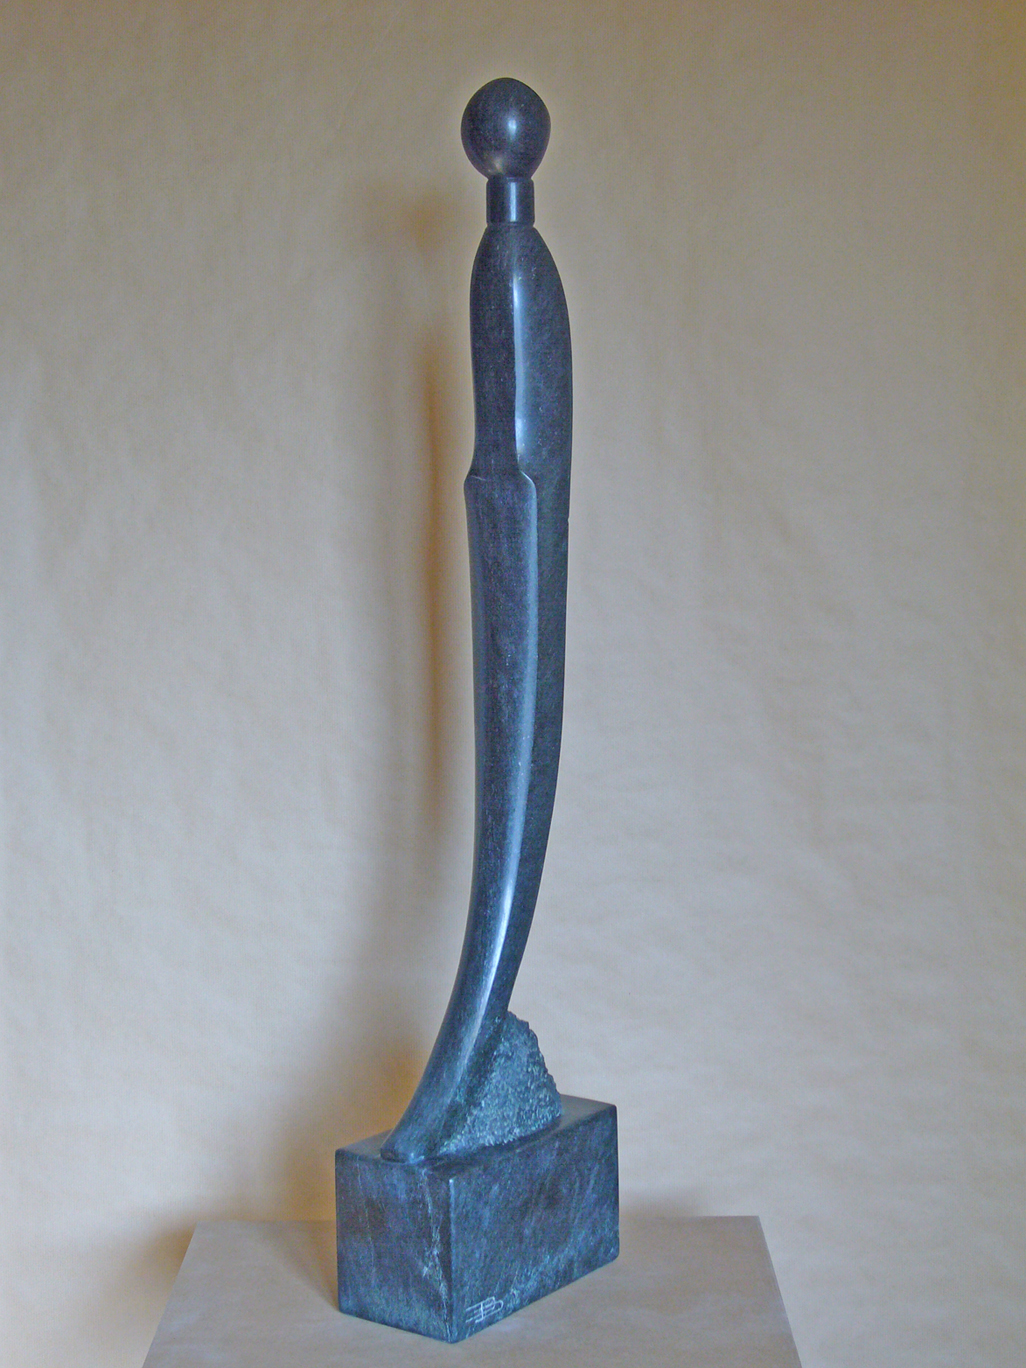 11 Mante Religieuse, 2012, serpentine, h 98 cm